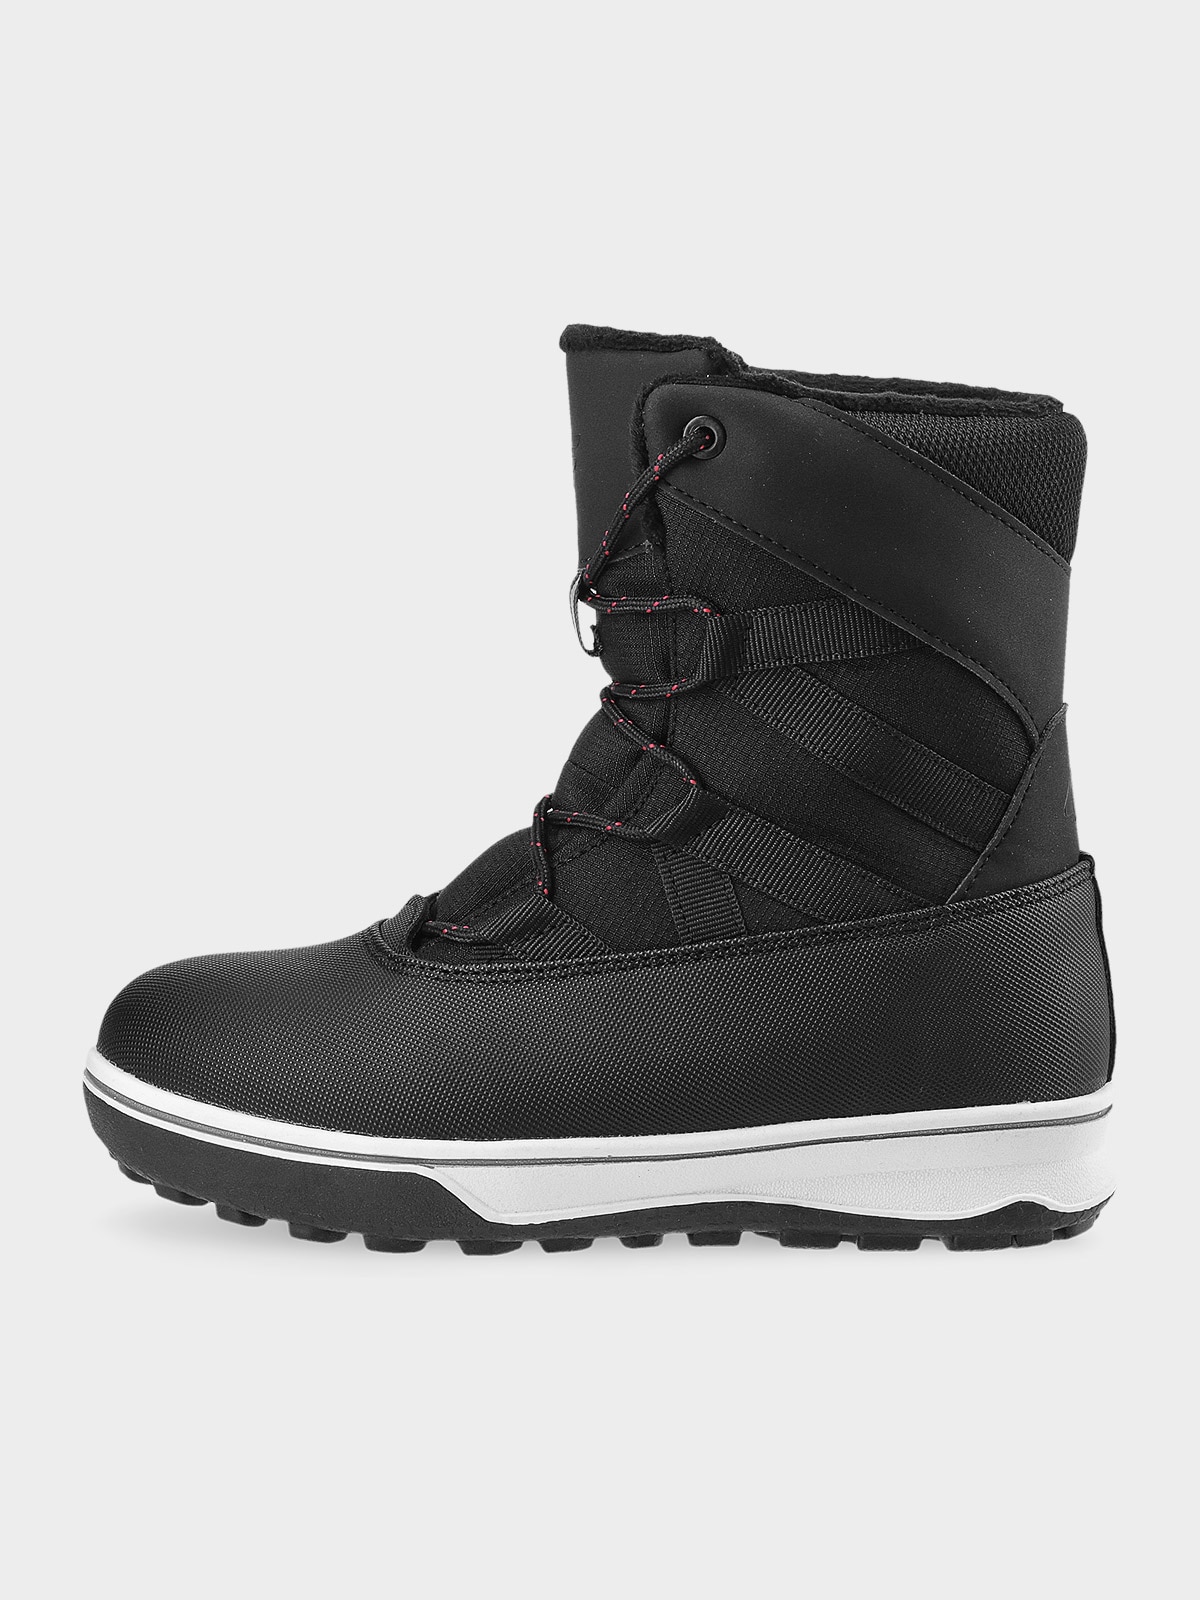 Chlapčenské zateplené topánky do snehu - čierne